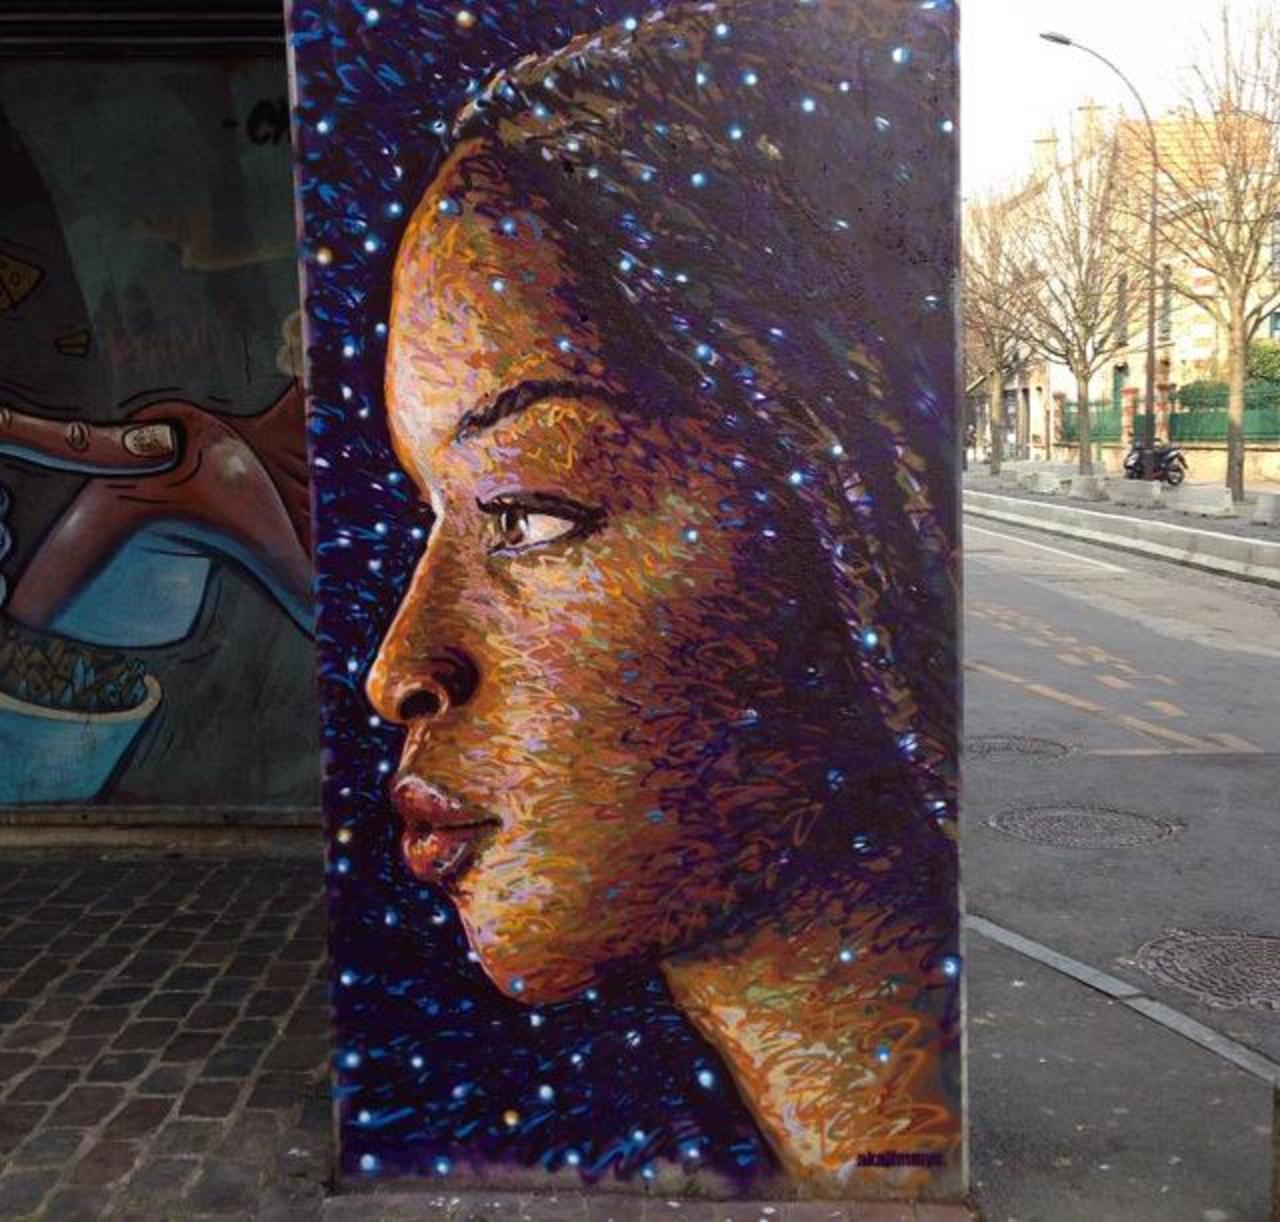 Street Art by Jimmy C in Vitry sur Seine, Paris

#art #arte #graffiti #streetart http://t.co/4vGQE3Fn08